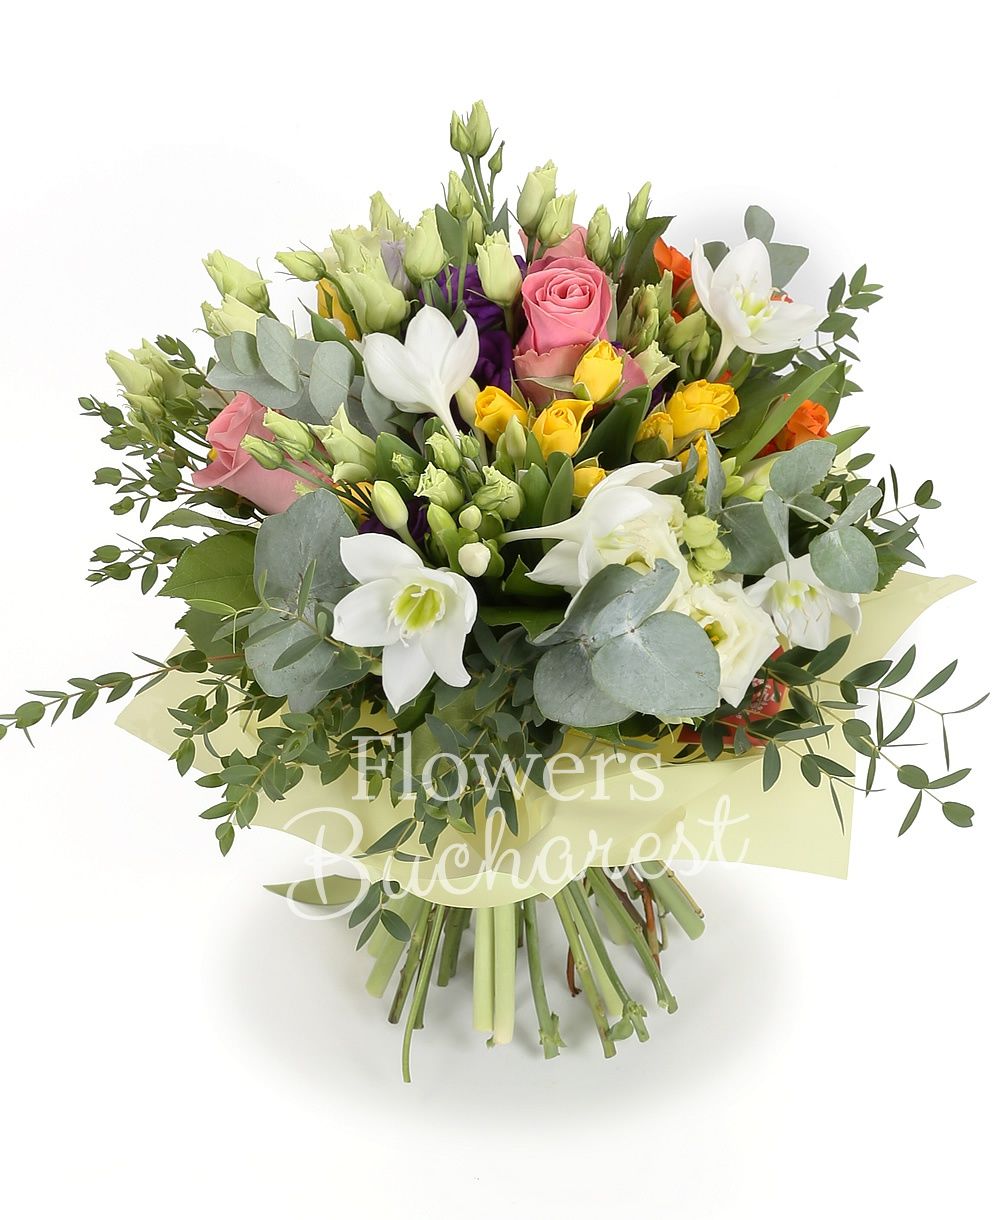 3 pink roses, 2 purple lisianthus, 3 white lisianthus, 3 yellow miniroses, 1 orange miniroses, 10 tulips, 3 eucharis, greenery